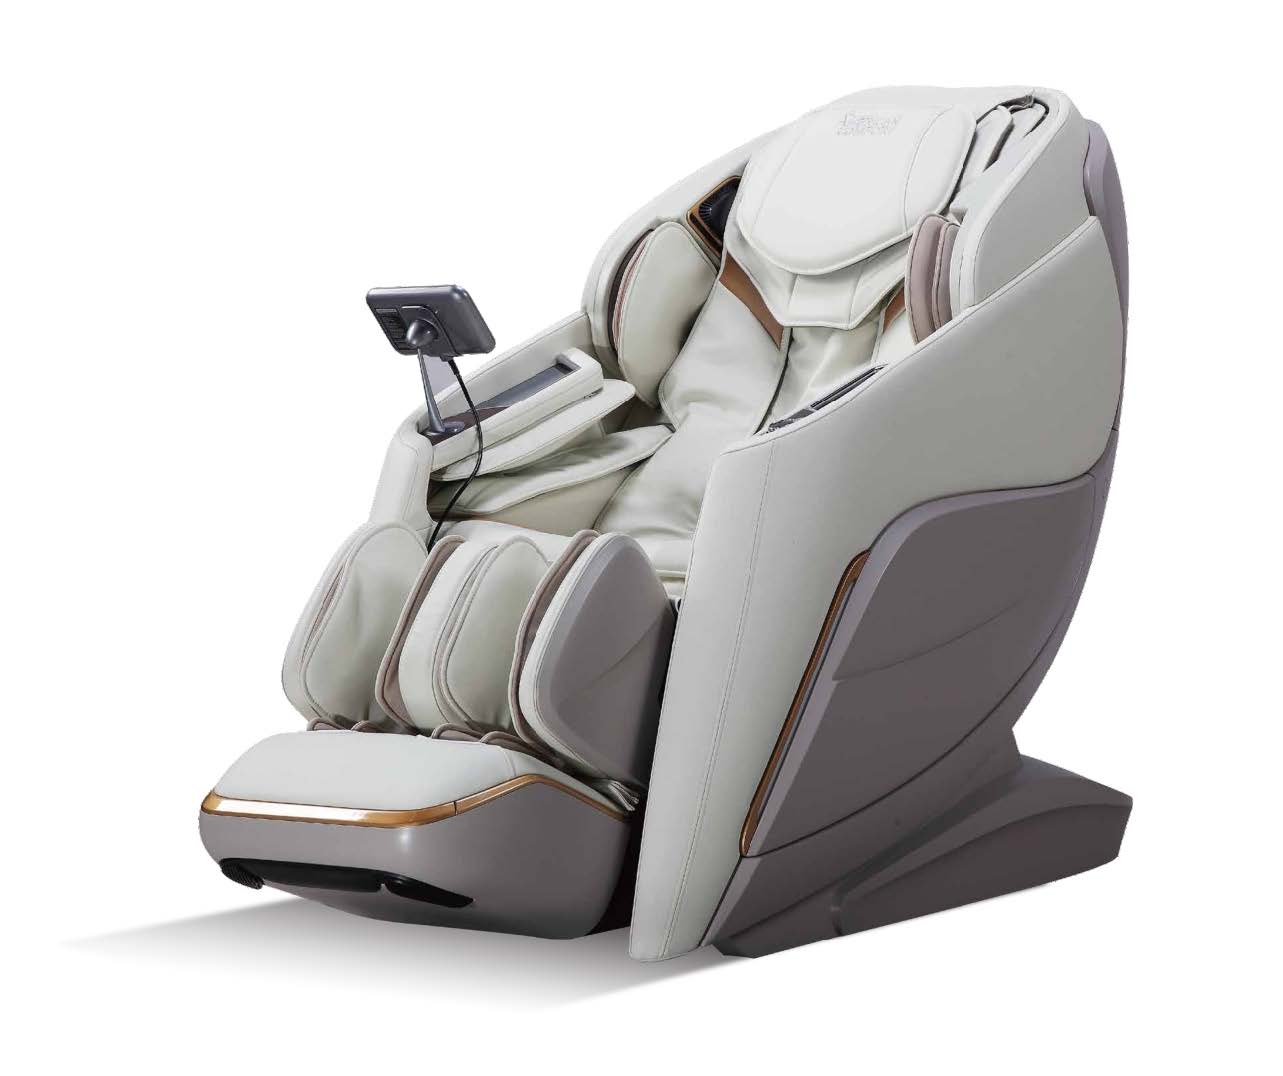 5D Massage Chair in hapur, 5D Massage Chair Manufacturers